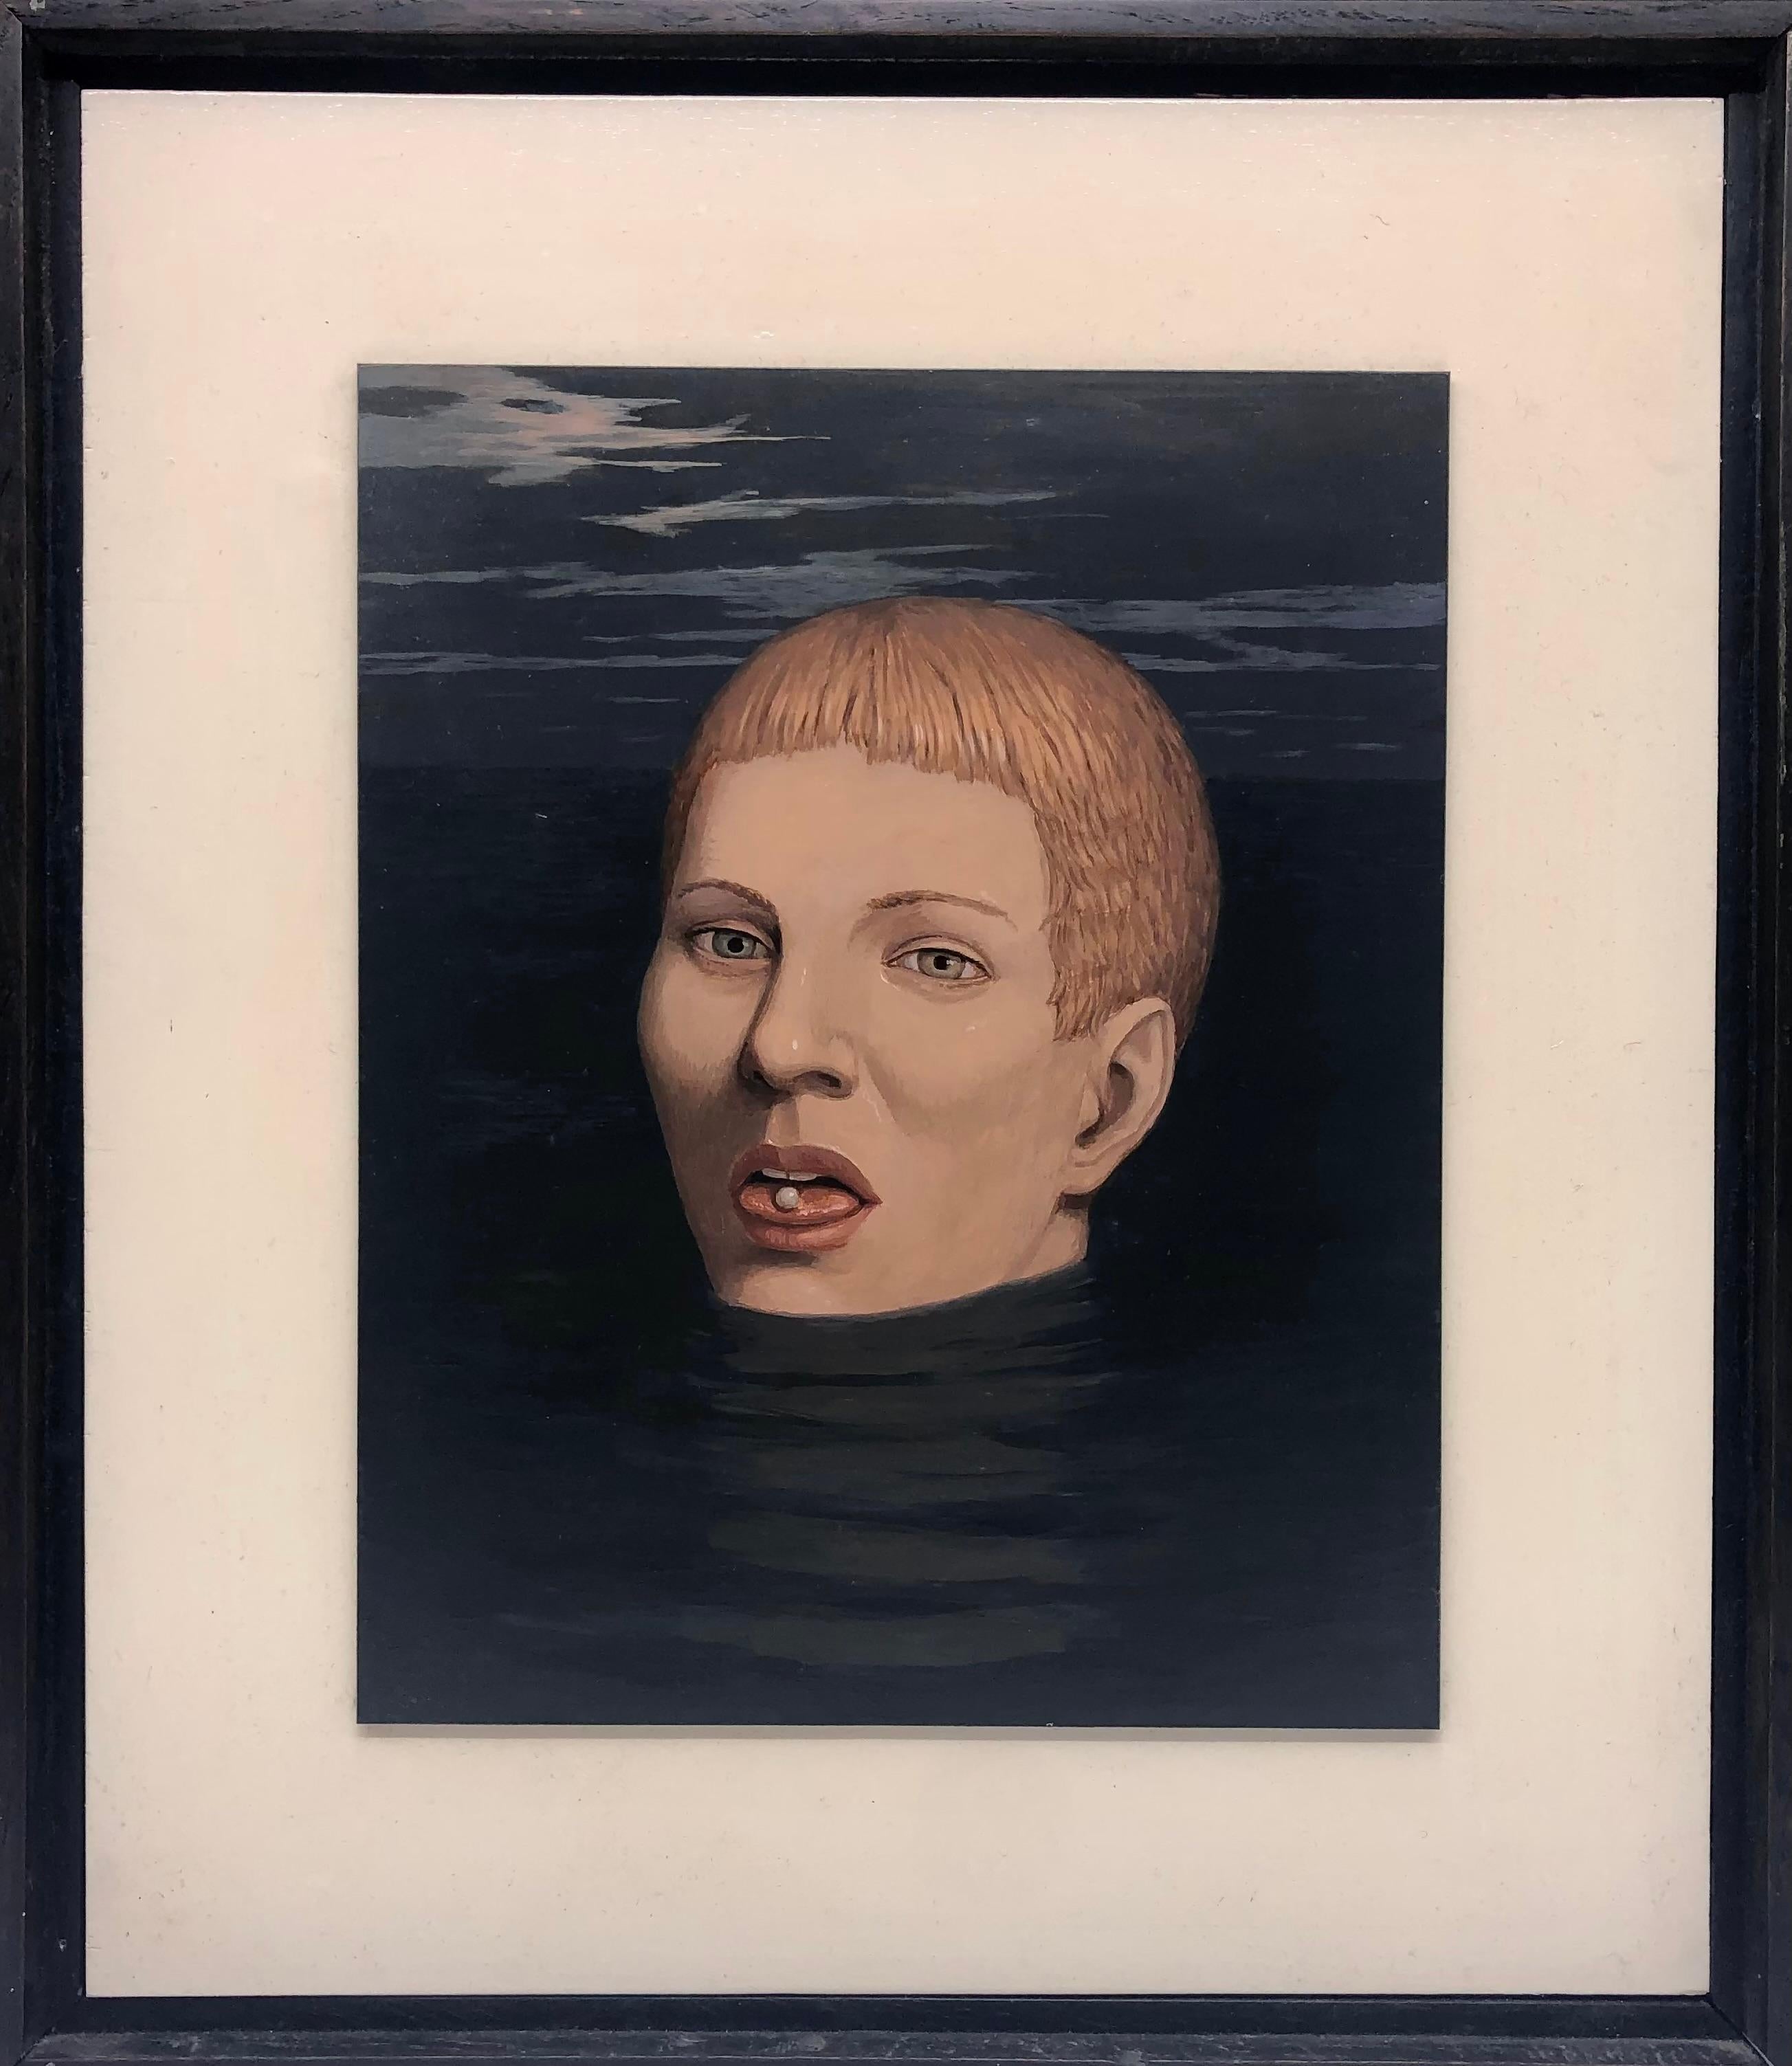 Paul Green Figurative Painting - "Diver" Contemporary Figurative Surrealist Portrait painting